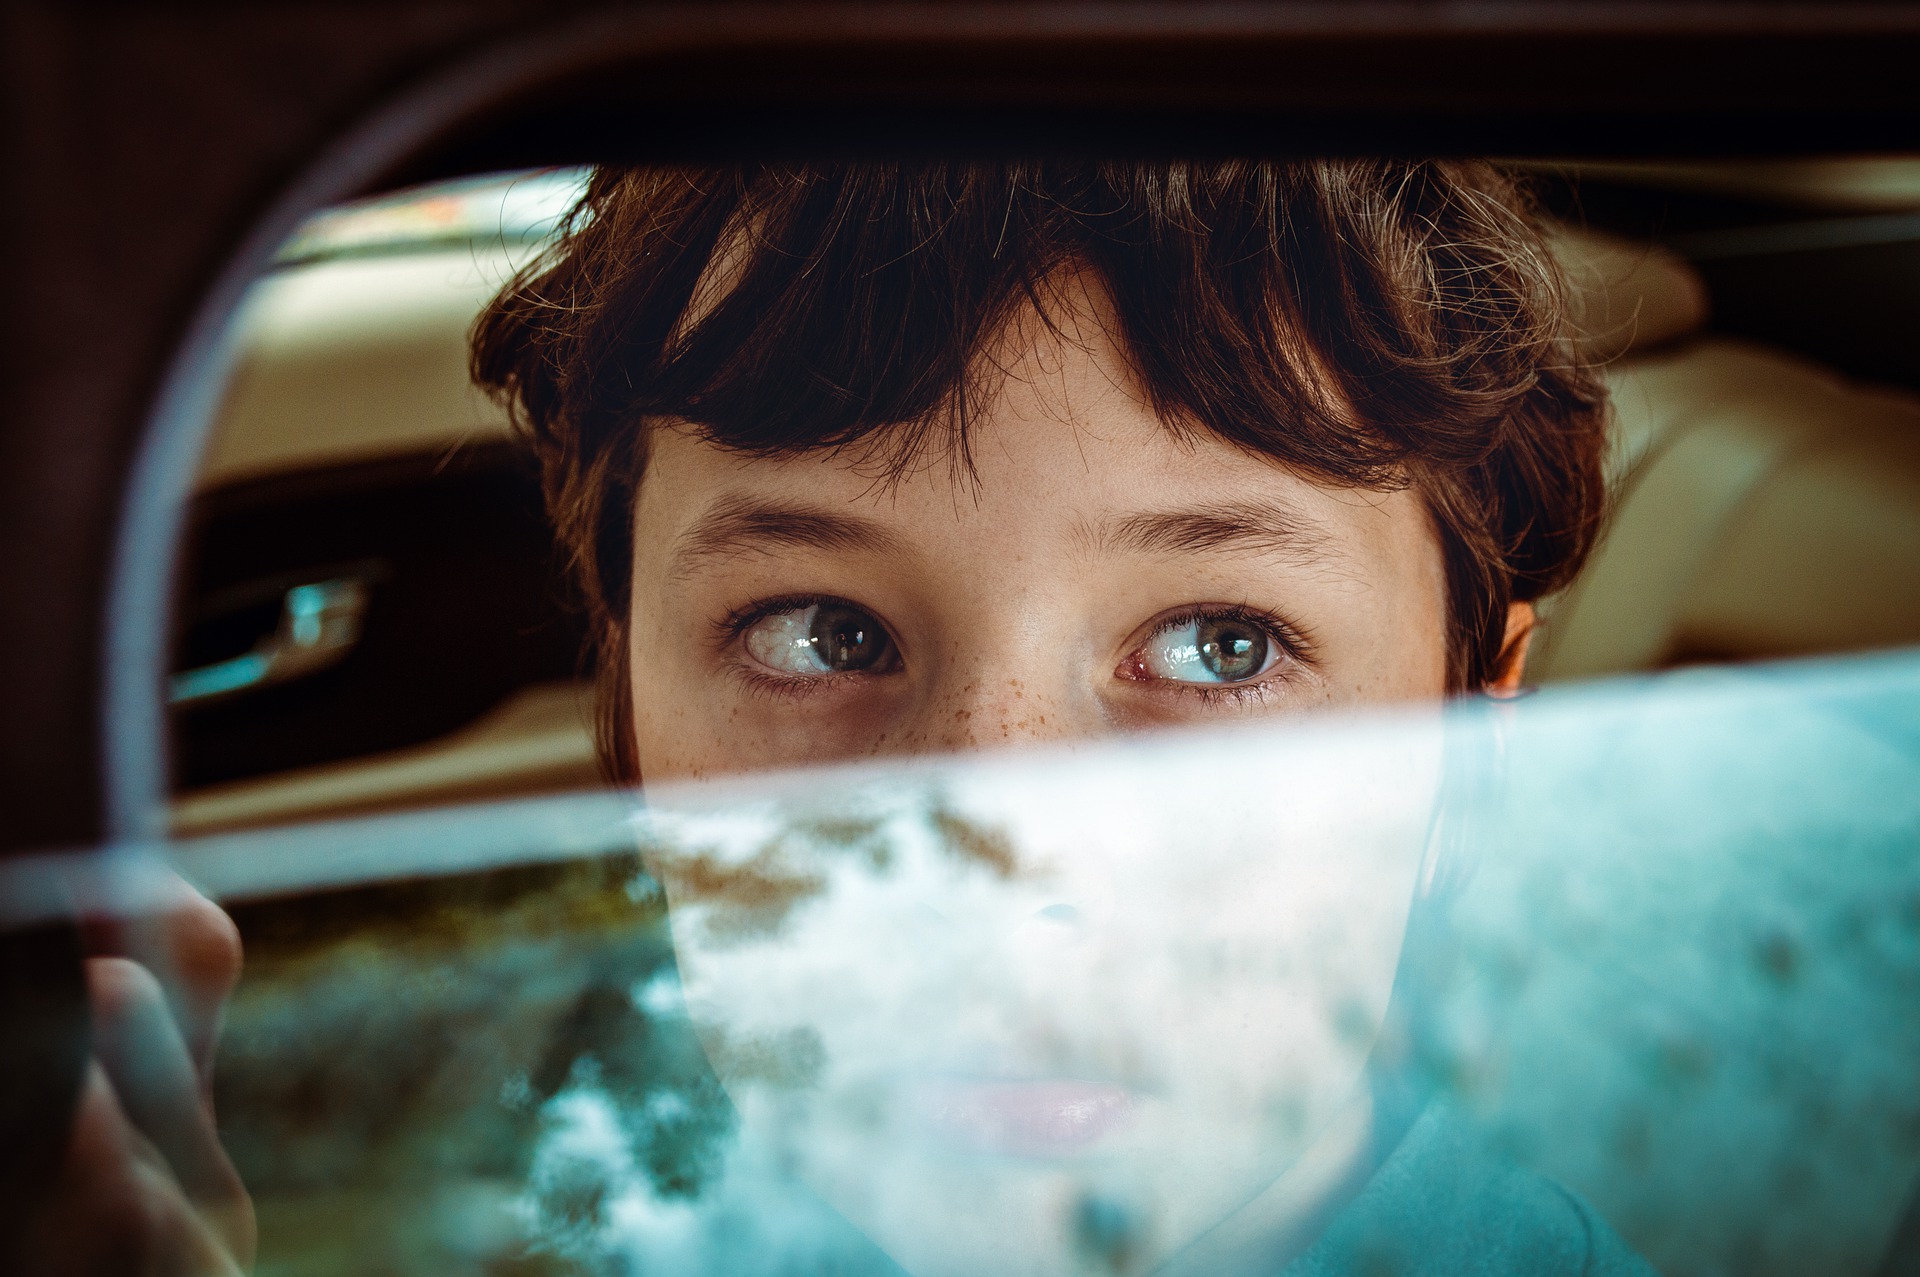 a boy looks out an open car window, reflections on window pane